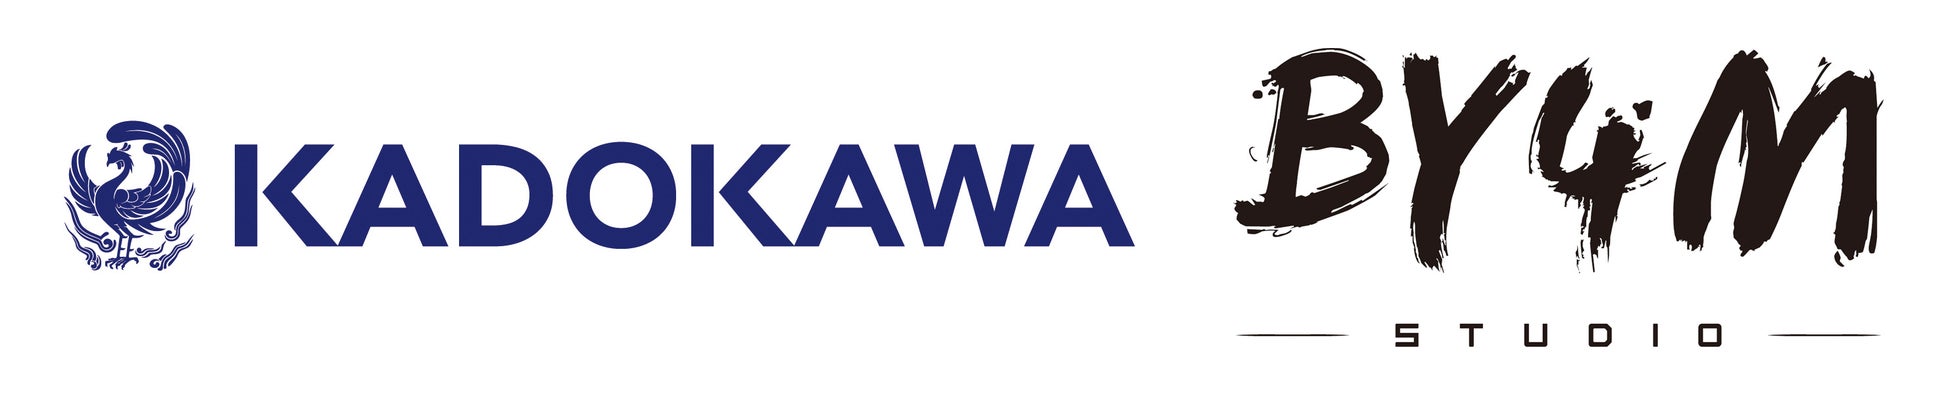 KADOKAWA、韓国BY4M社と韓国にて合弁会社を設立